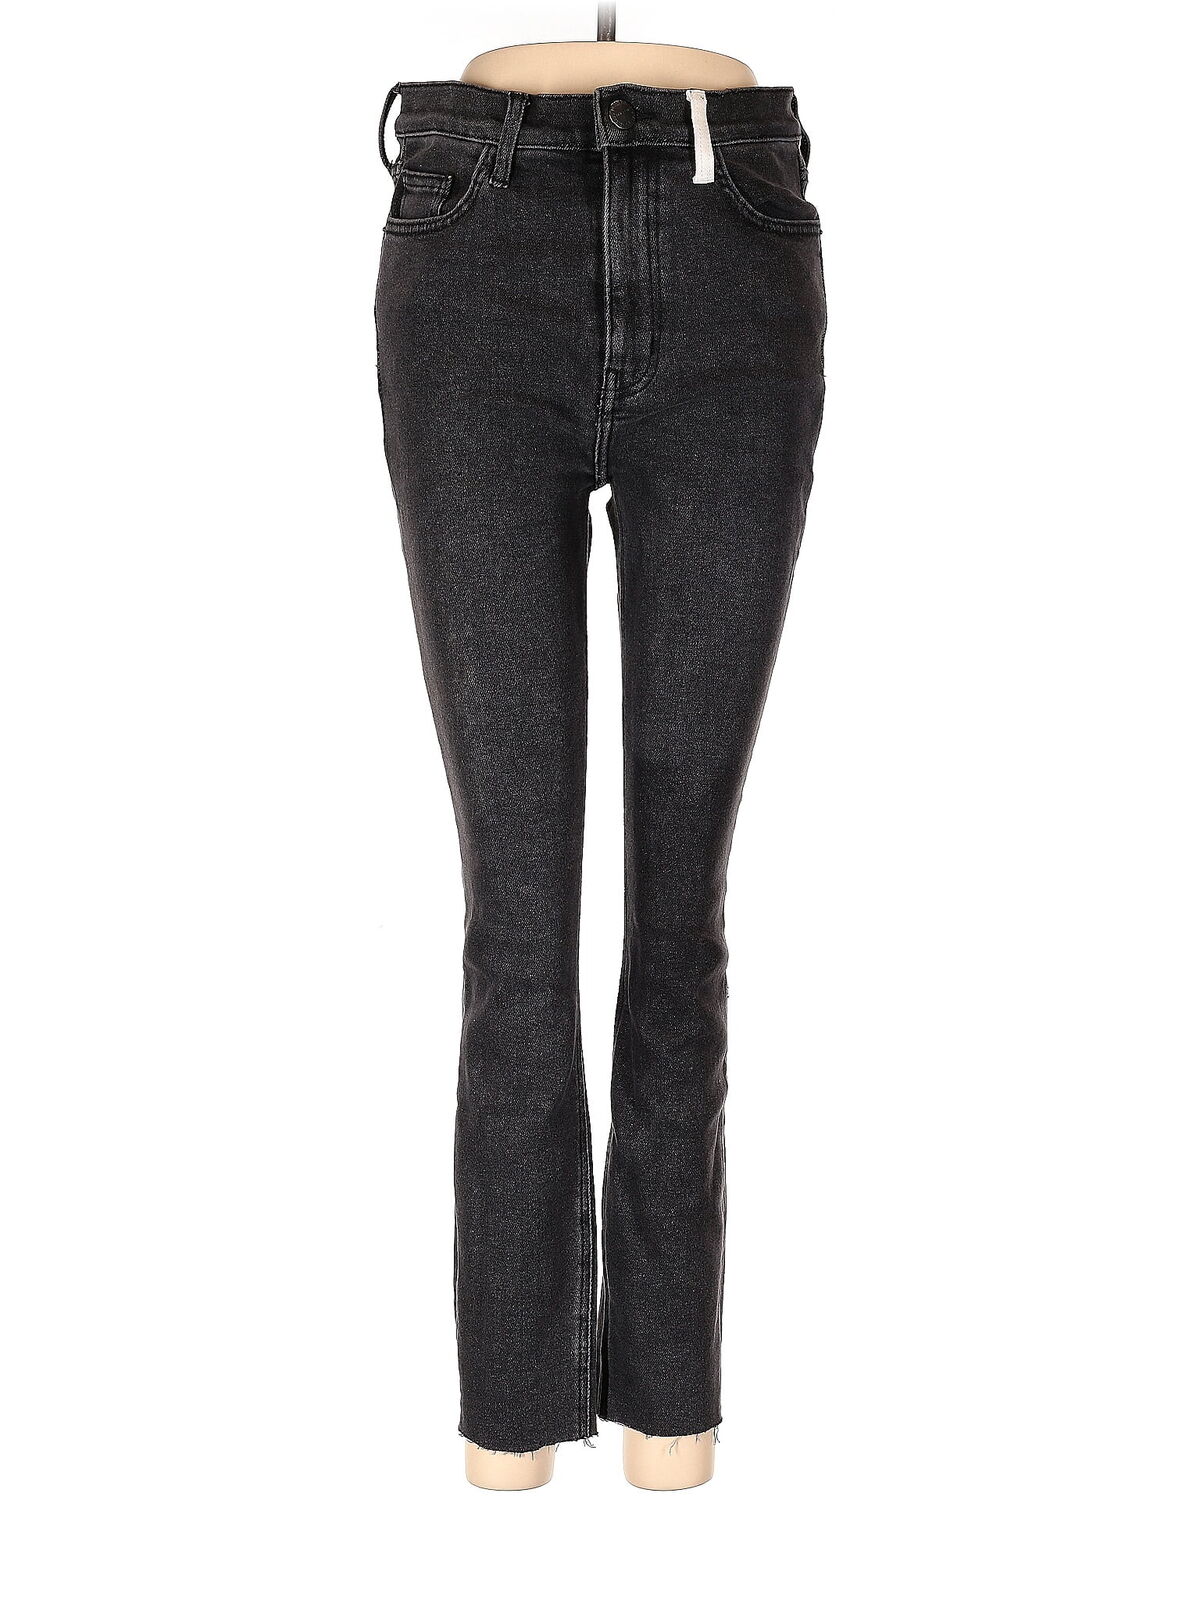 Current/Elliott Women Black Jeans 28W - image 1